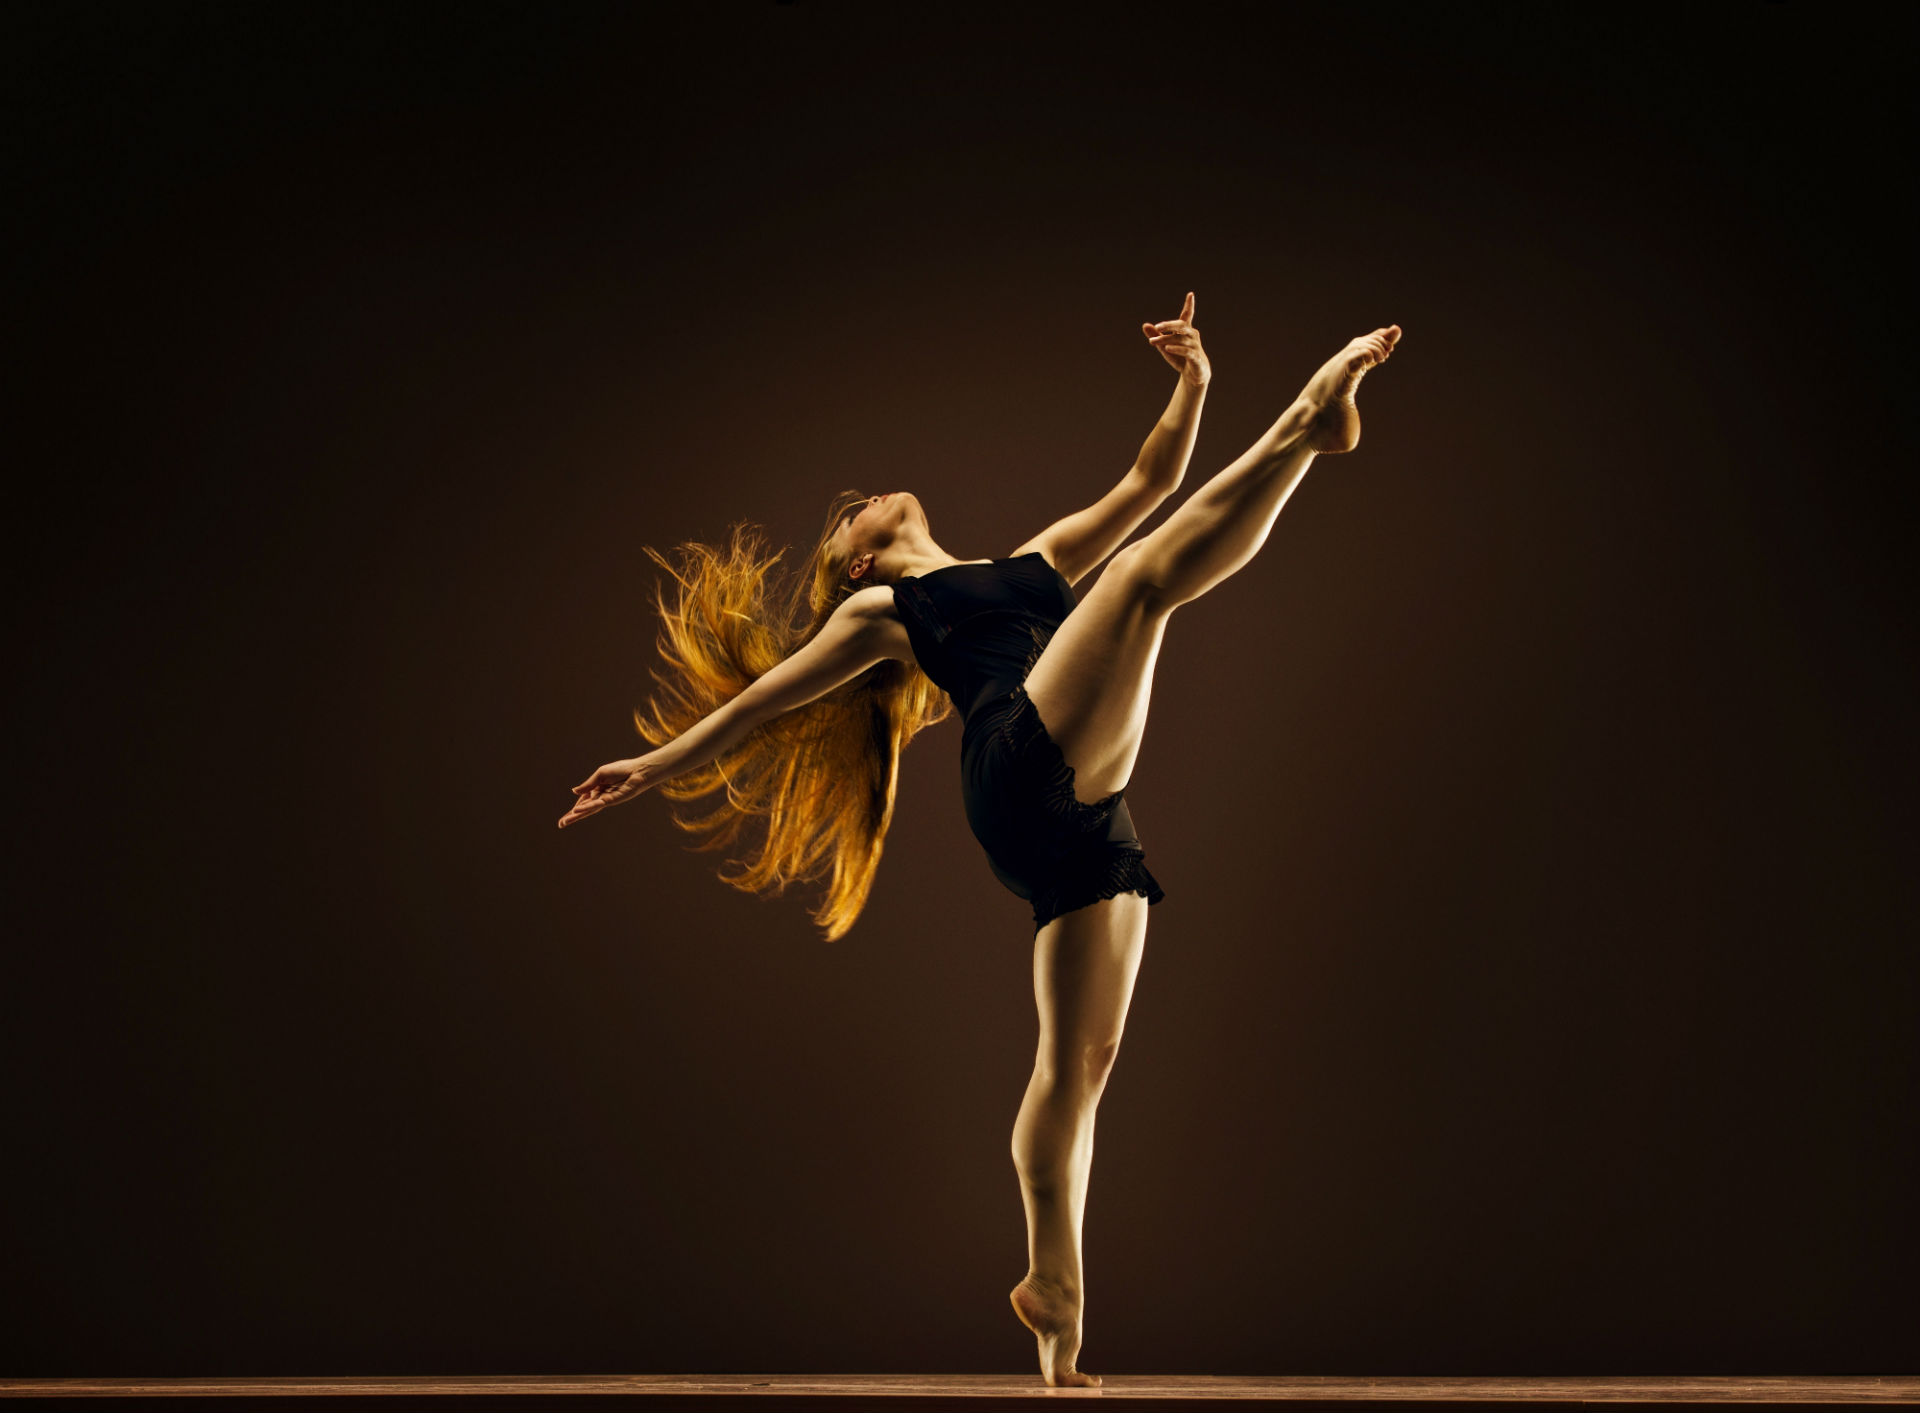 dance wallpaper,athletic dance move,dancer,choreography,performing arts,entertainment